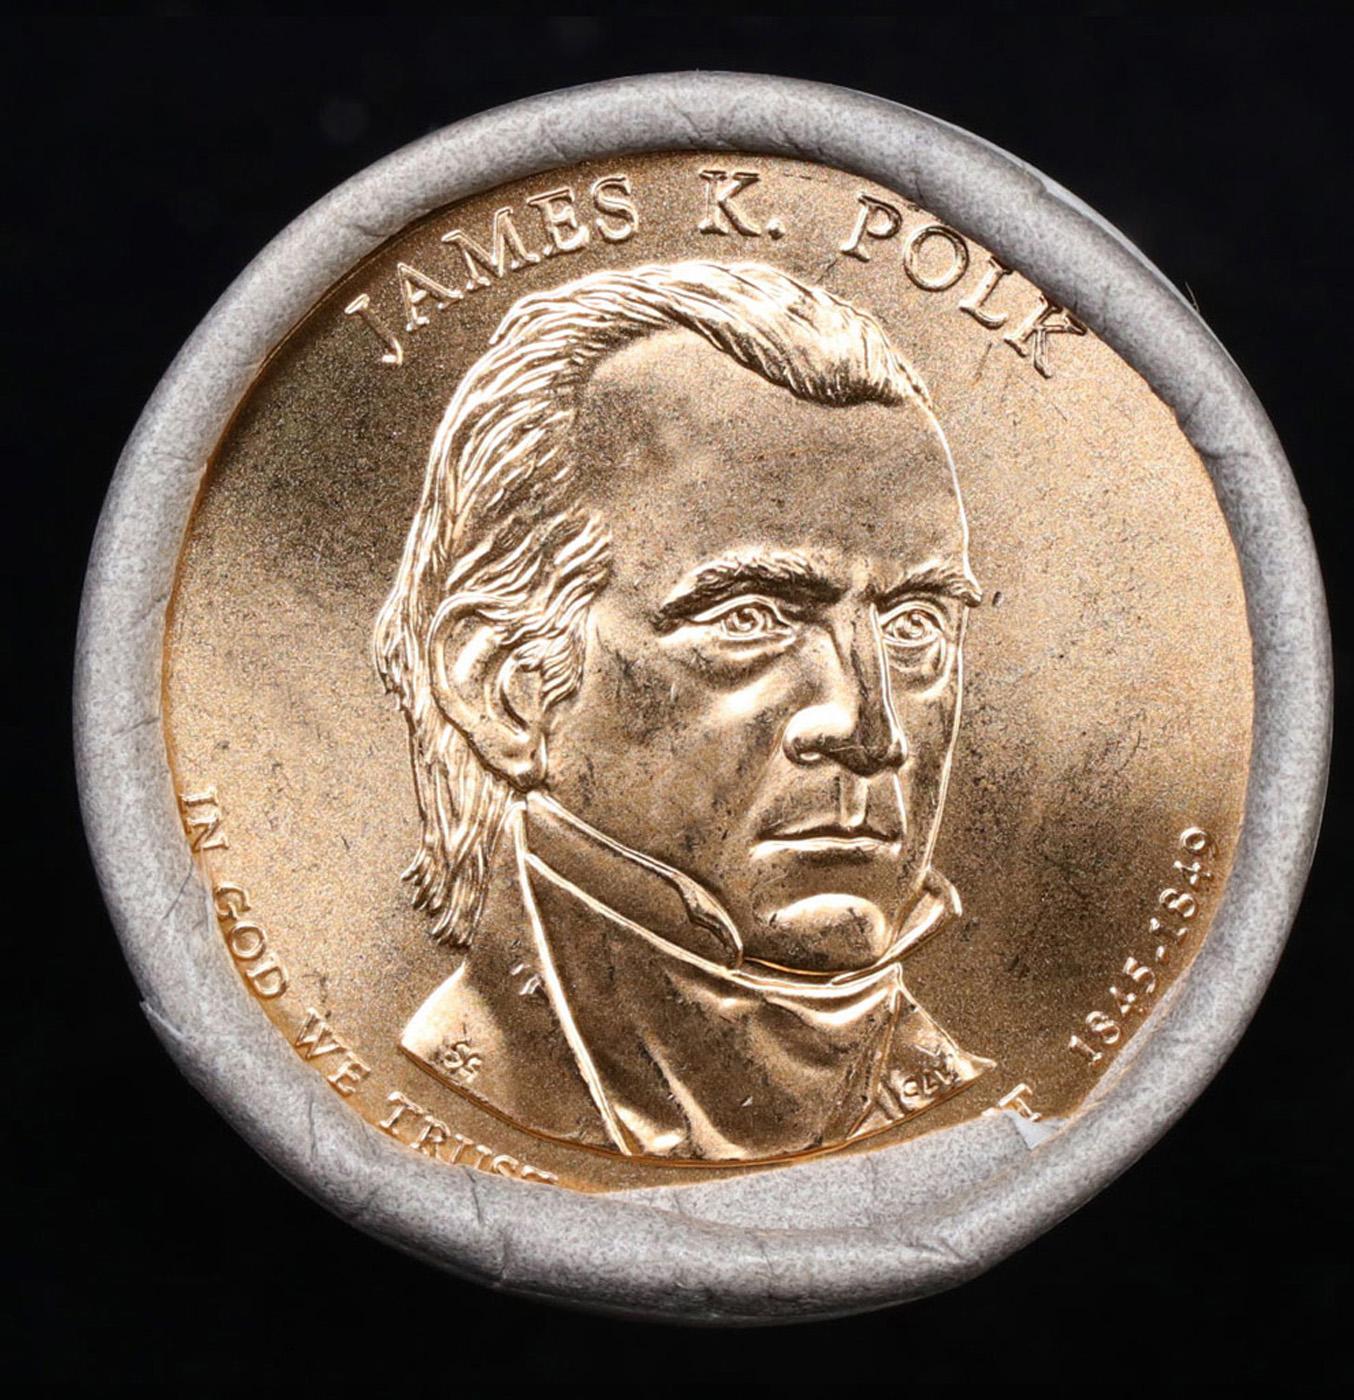 Full Roll of 2009-p James K Polk Presidential $1 Coin Rolls in OriginalDunbar Wrapper. 25 coins in t